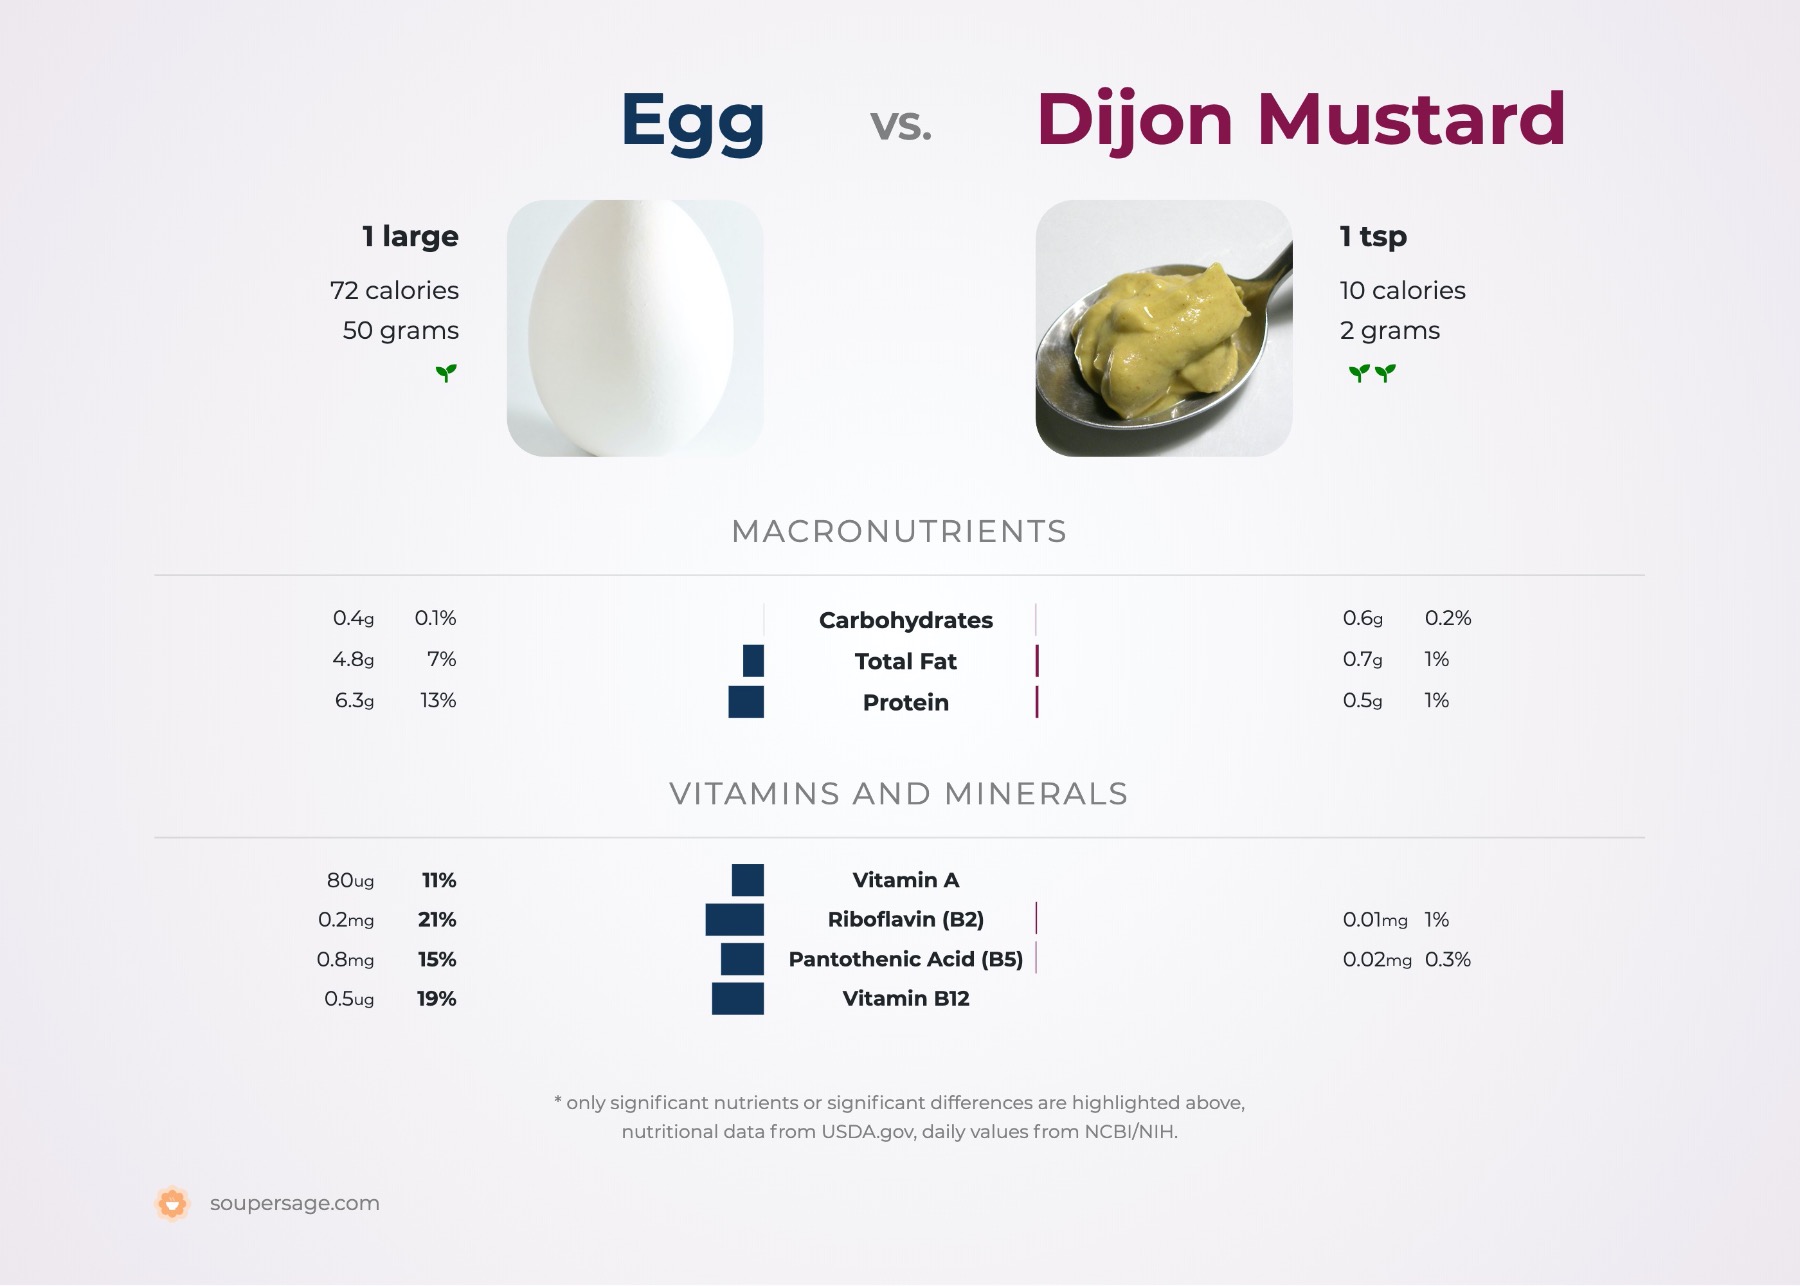 nutrition comparison of egg vs. dijon mustard